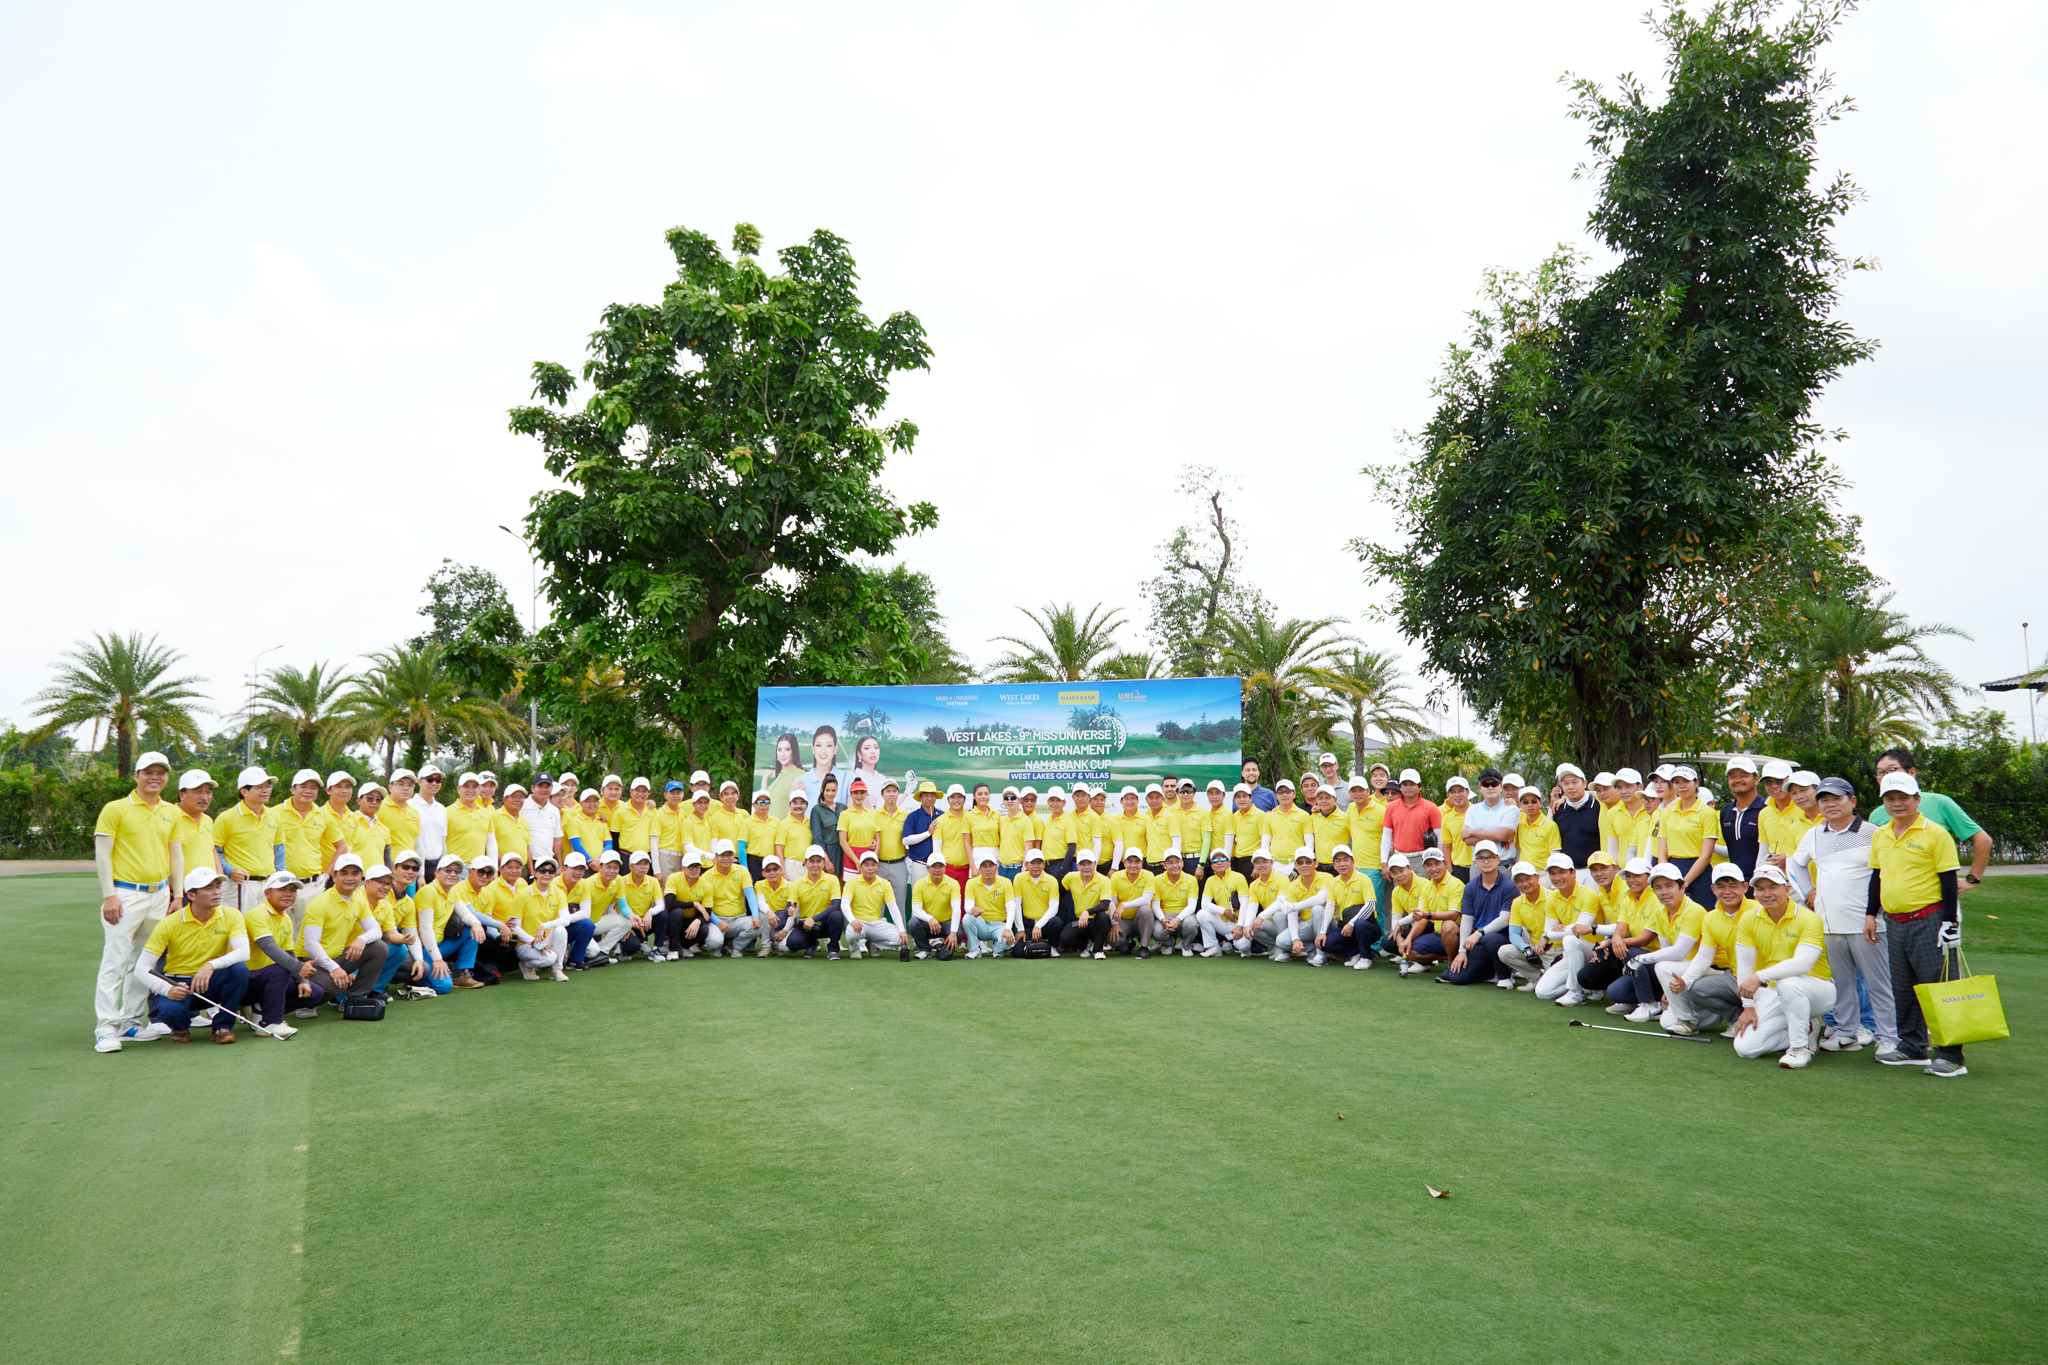 Hơn 160 golfer tham gia giải đấu tại sân golf West Lake